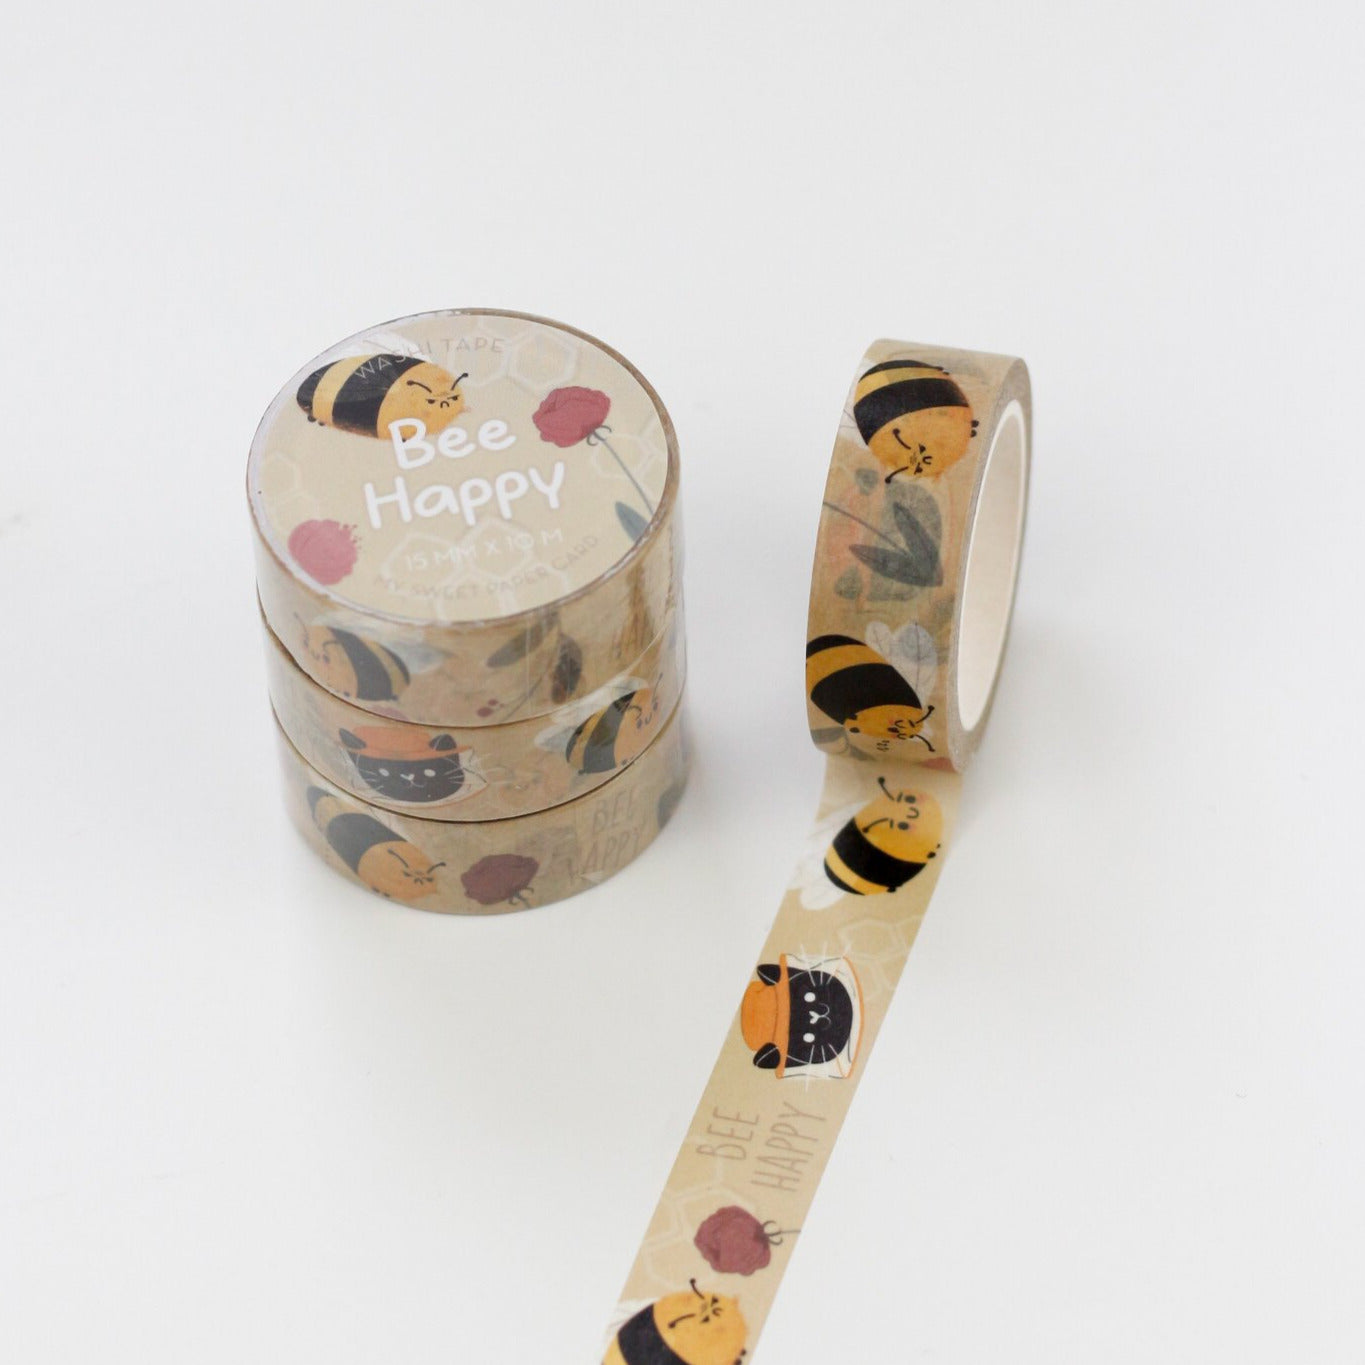 Bee Happy - Bee washi tape - Cute washi tape – My Sweet Paper Card